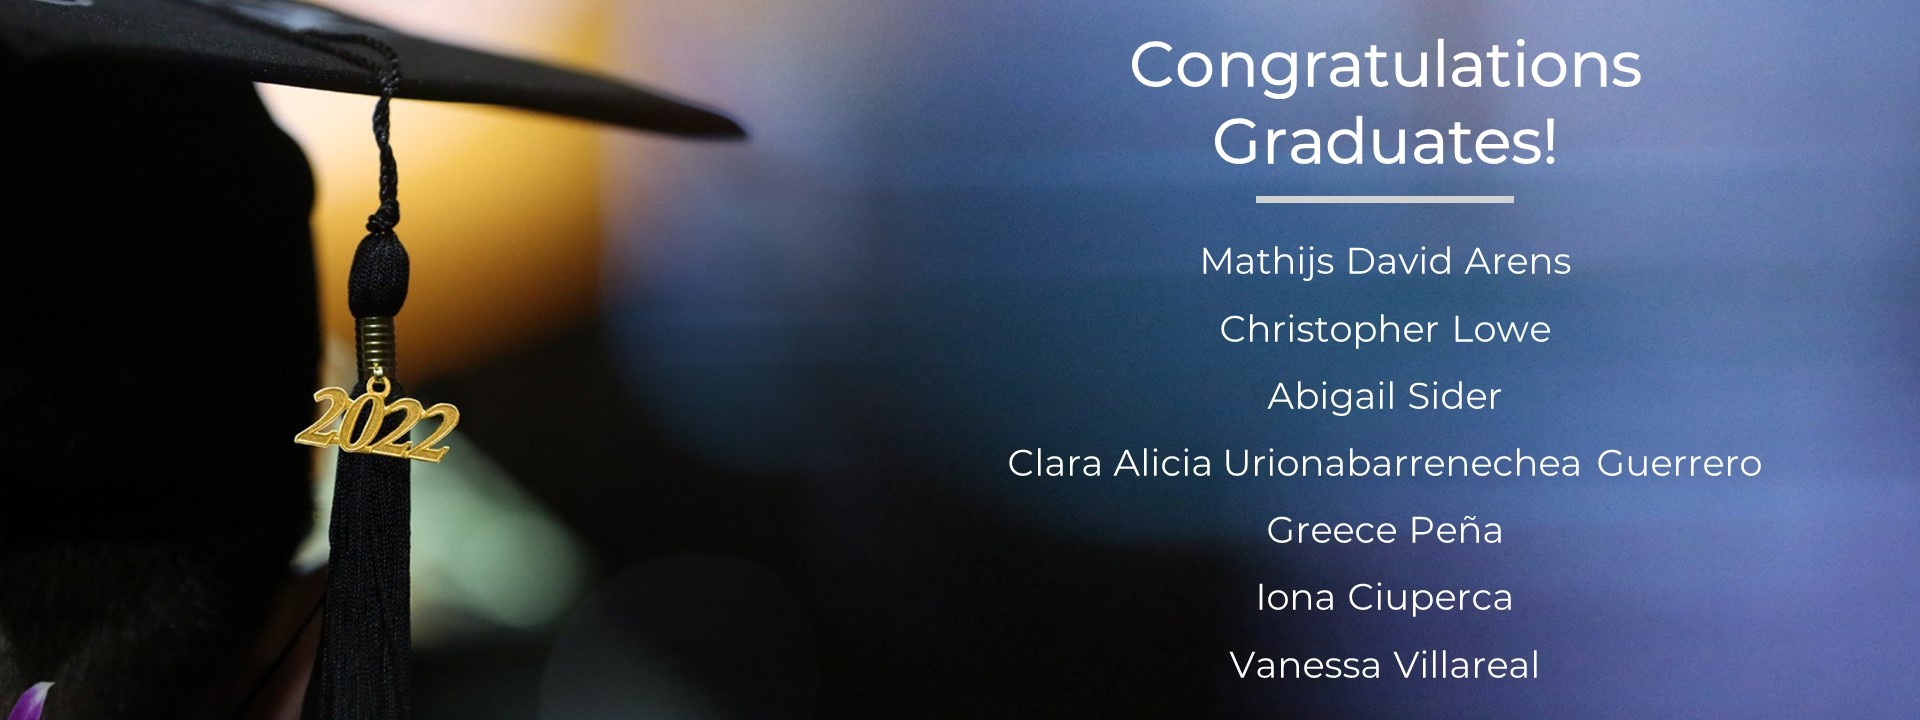 Congratulations Graduates! : Mathijs David Arens Christopher Lowe Abigail Sider Clara Alicia Urionabarrenechea Guerrero Greece P